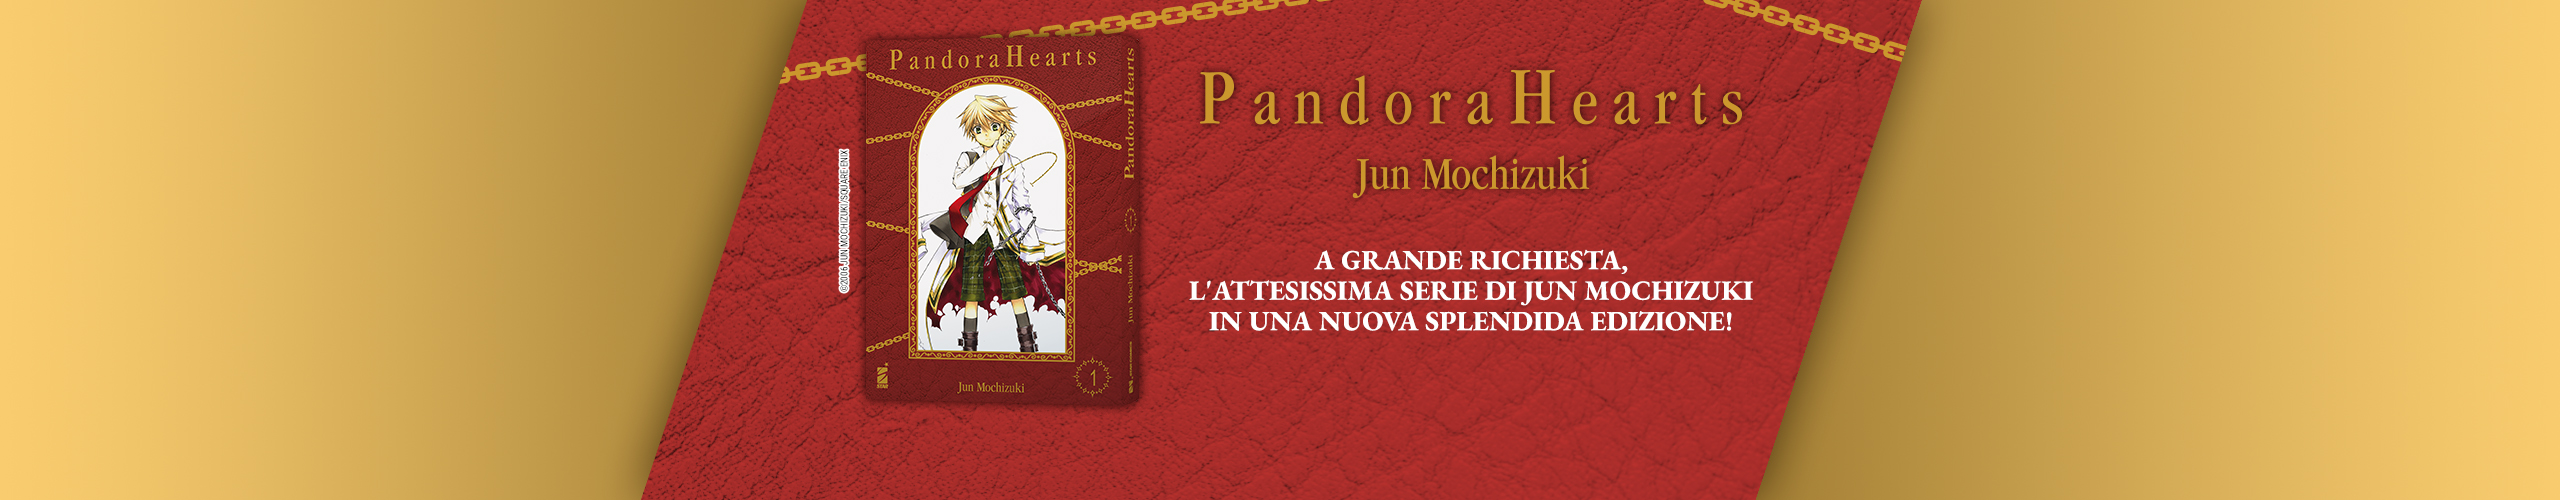 Pandora Hearts-News_home.jpg